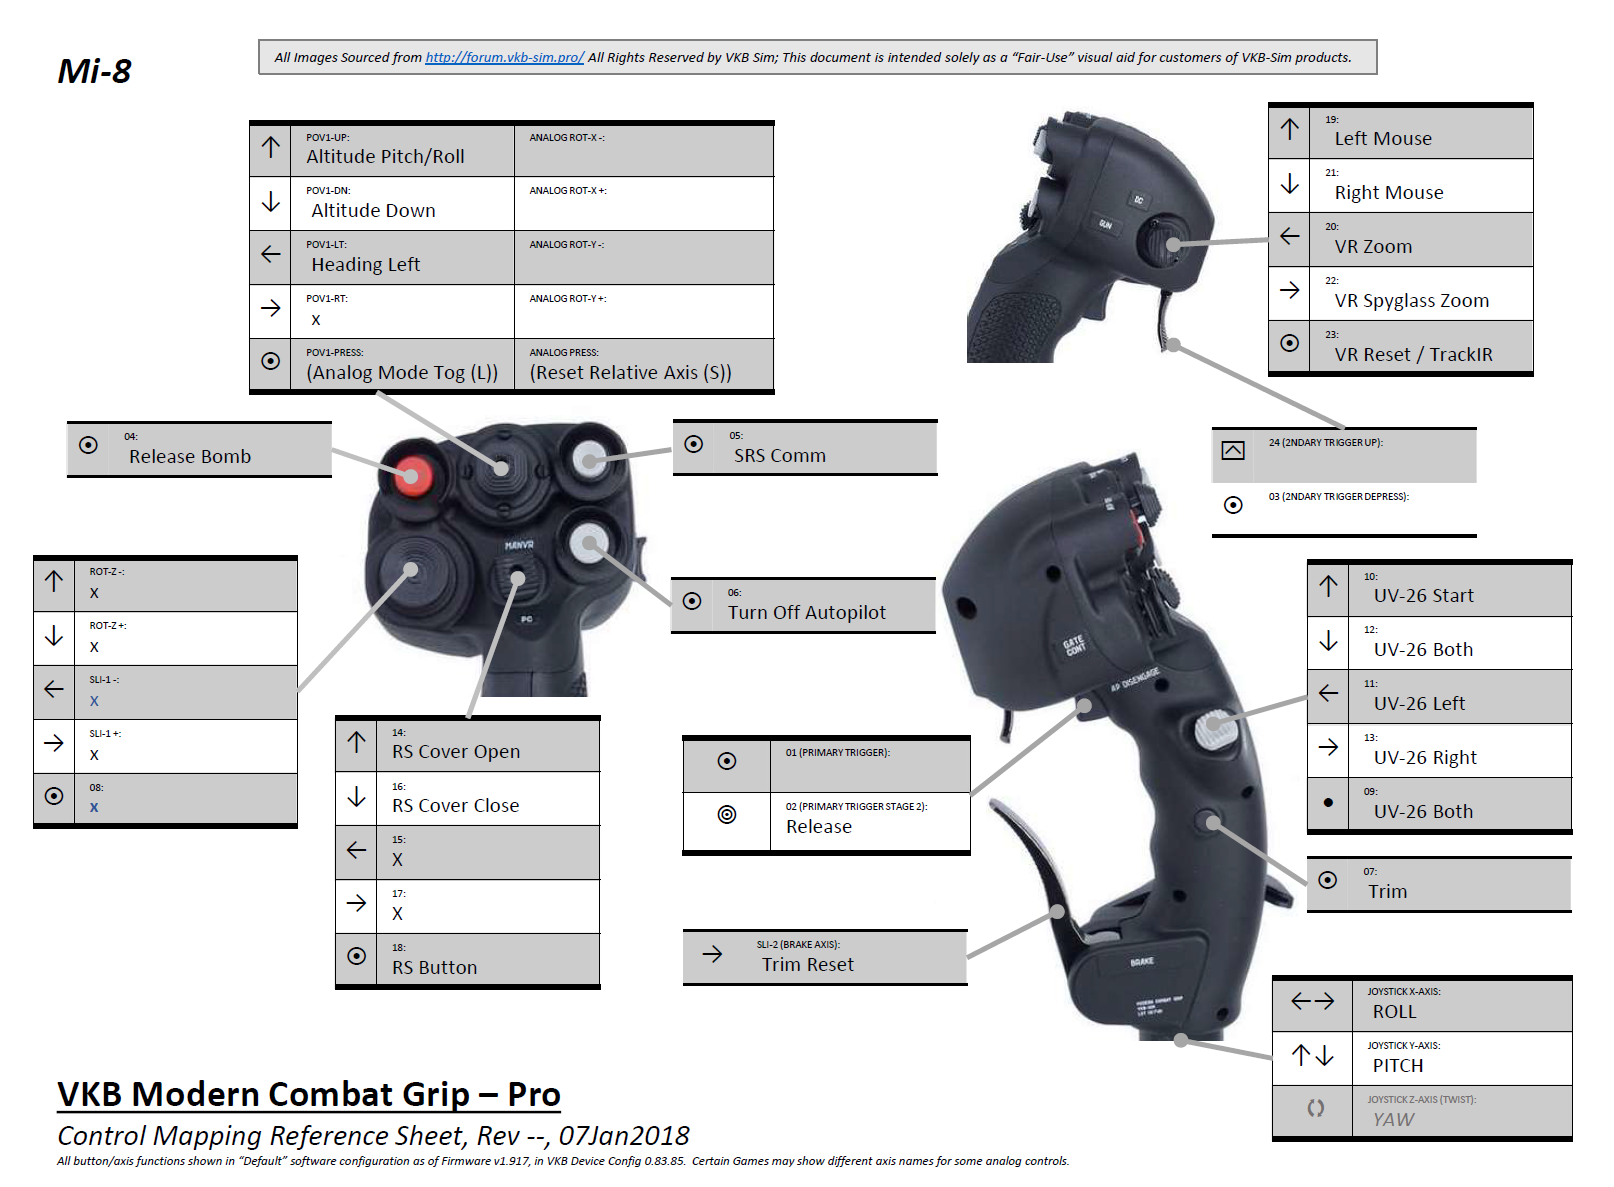 Profile VKB Modern Combat Grip Pro (MCG Pro), Warthog Throttle & K-51 Collective for Mi-8